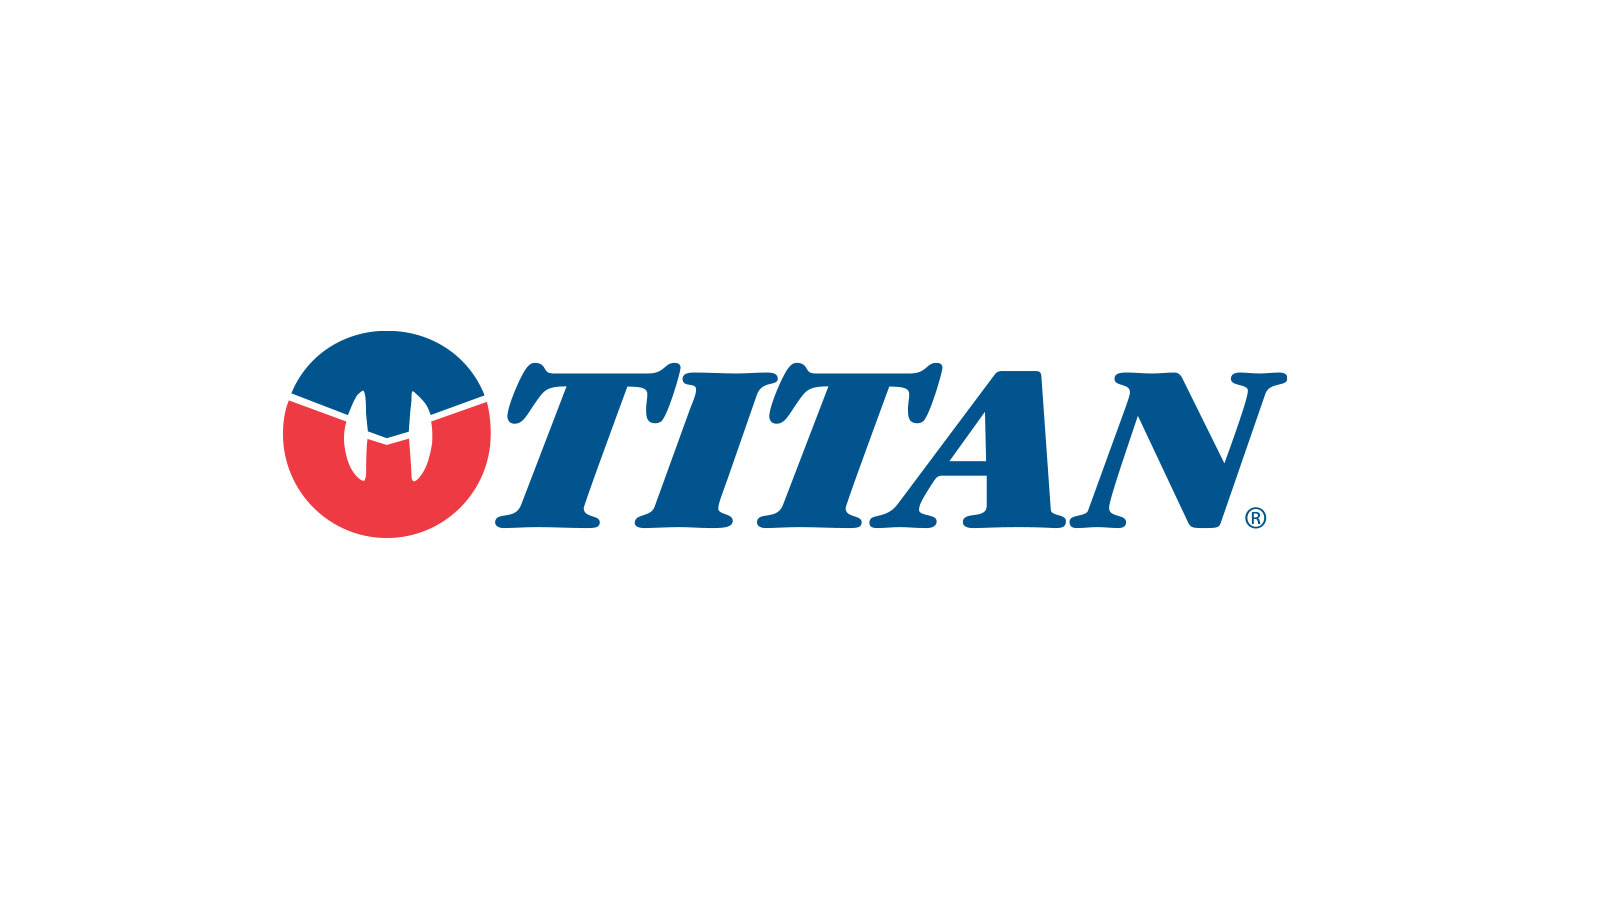 Titan International, Inc. Logo